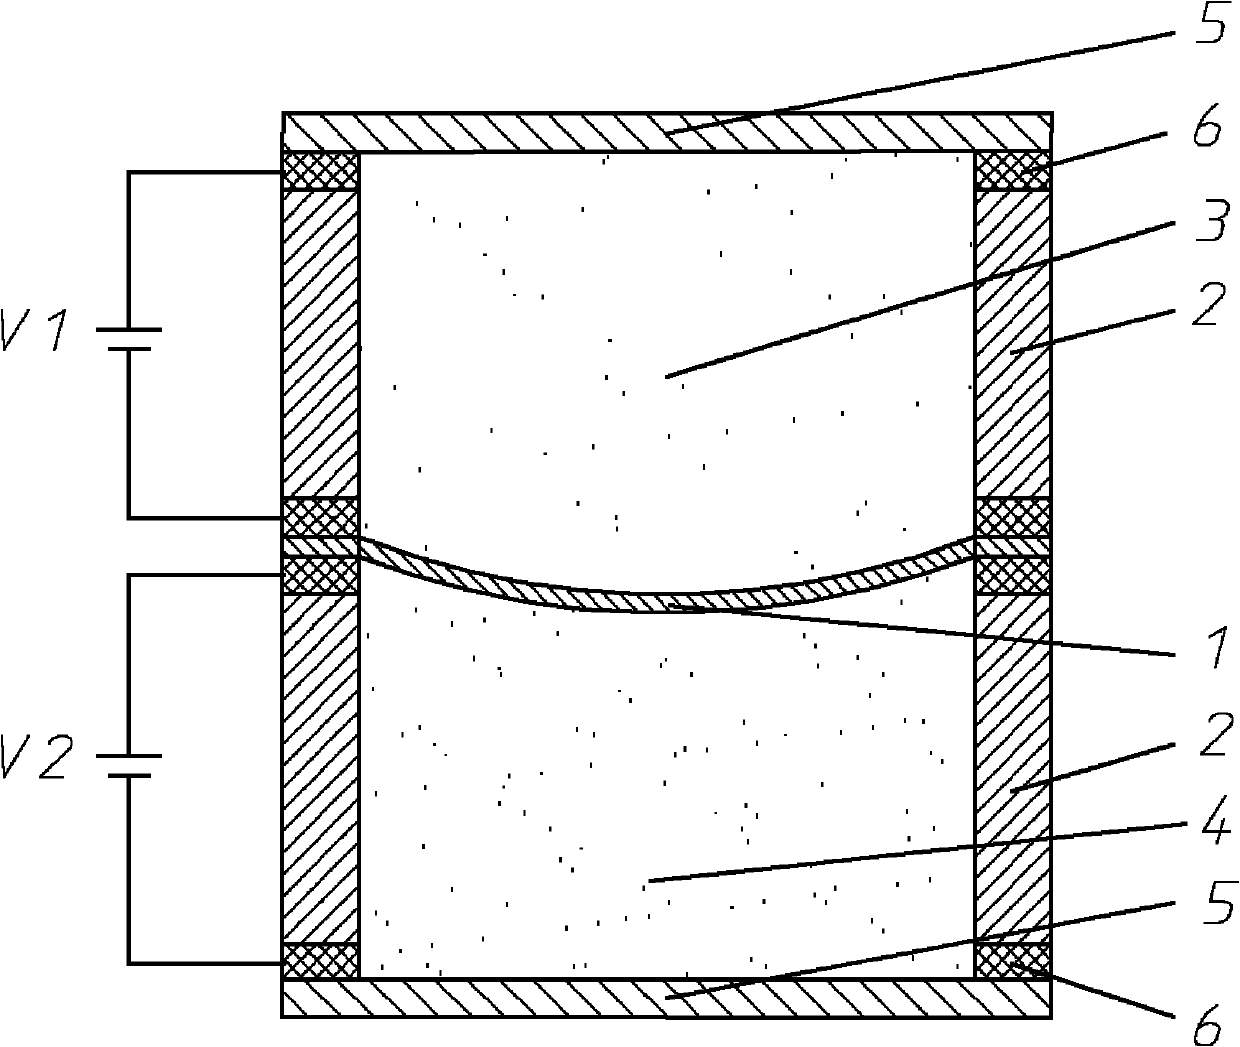 Varifocal double-liquid lens based on inverse piezoelectric effect